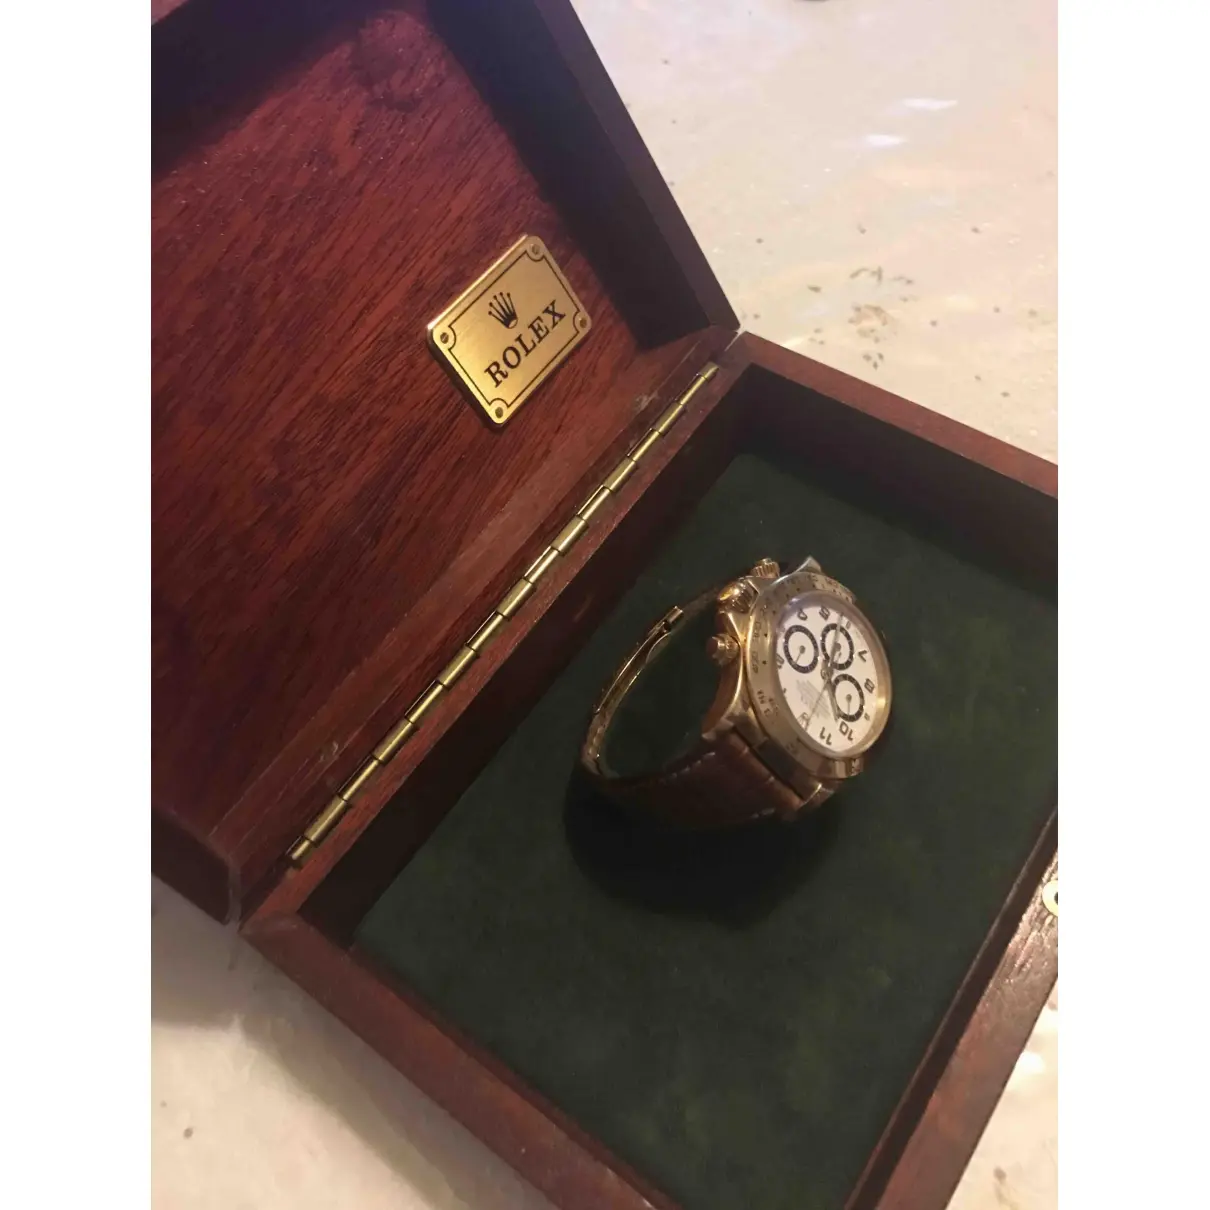 Daytona yellow gold watch Rolex - Vintage